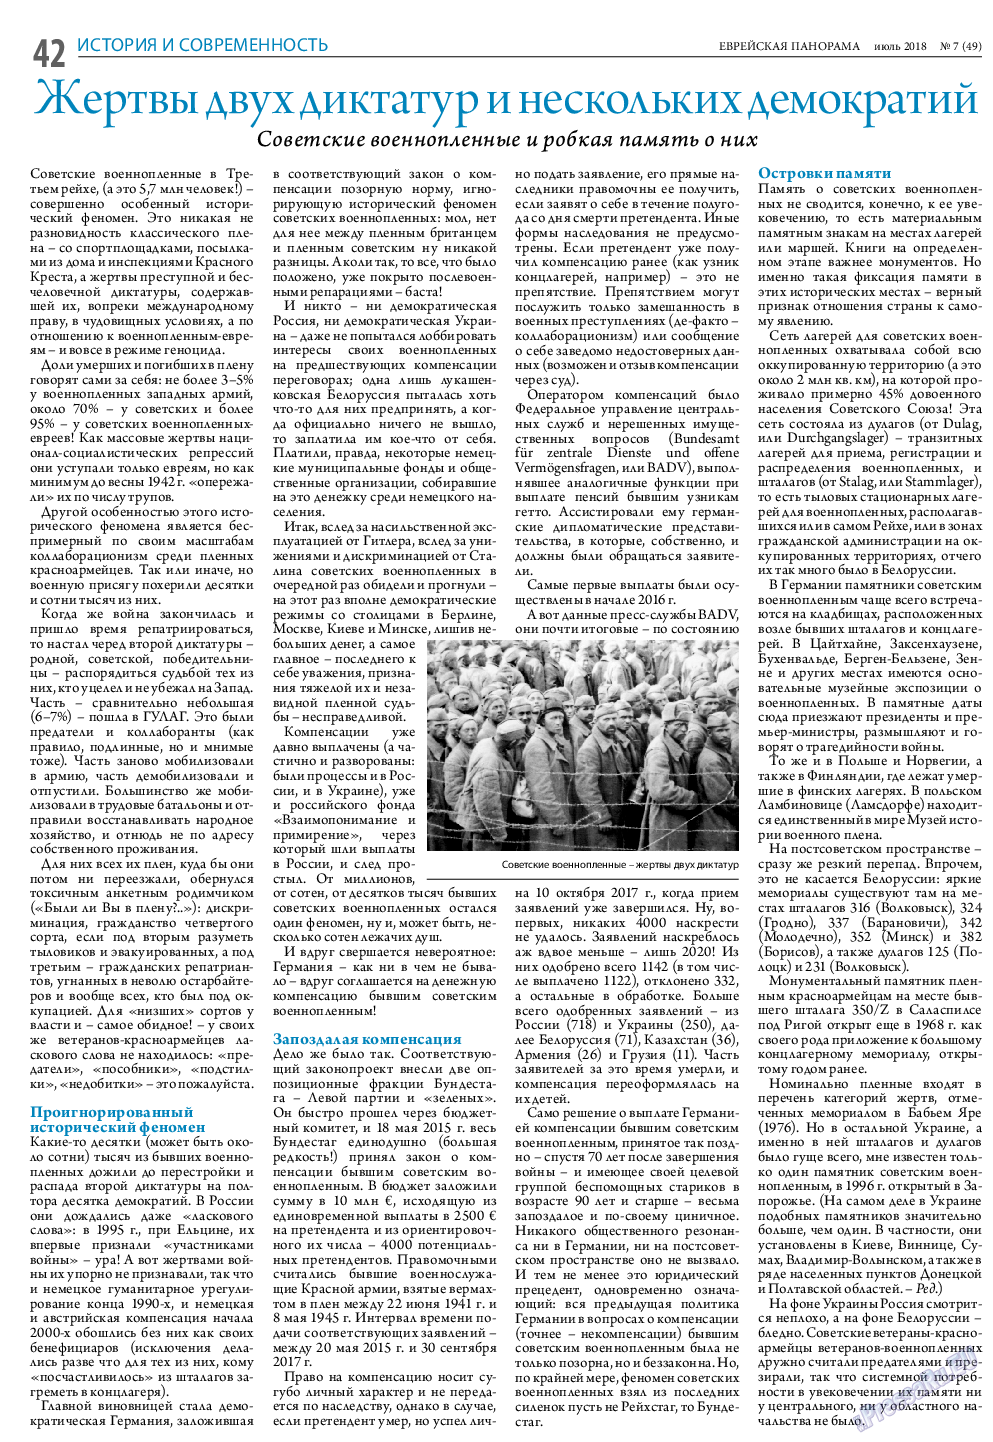 Еврейская панорама, газета. 2018 №7 стр.42